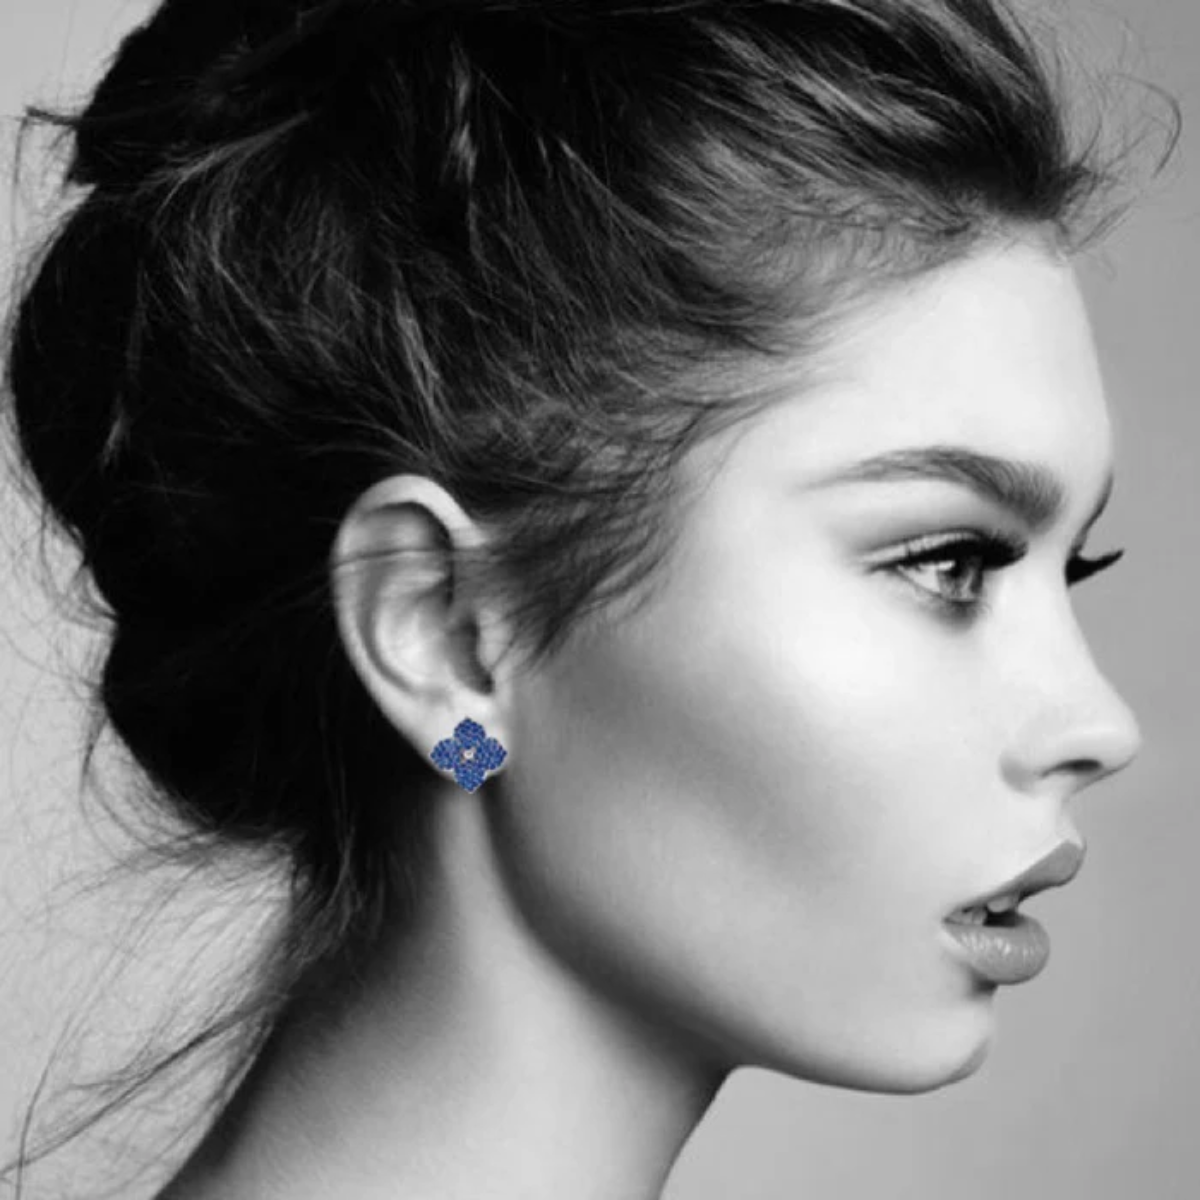 Small Sapphire Fleur Earring